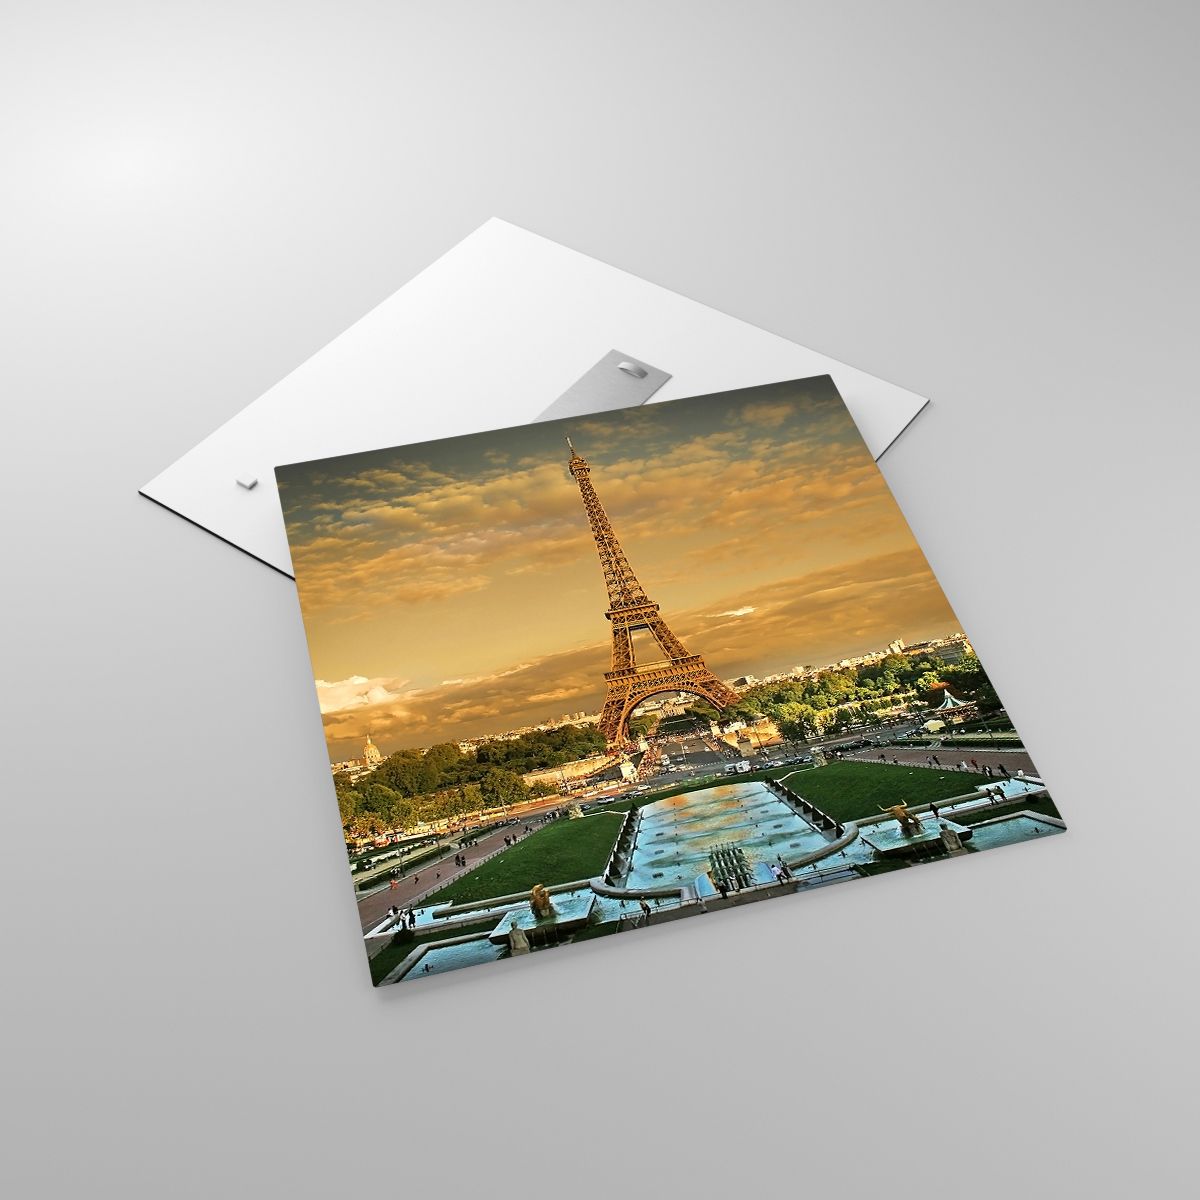 Impression Villes, Impression Paris, Impression Tour Eiffel, Impression Architecture, Impression France